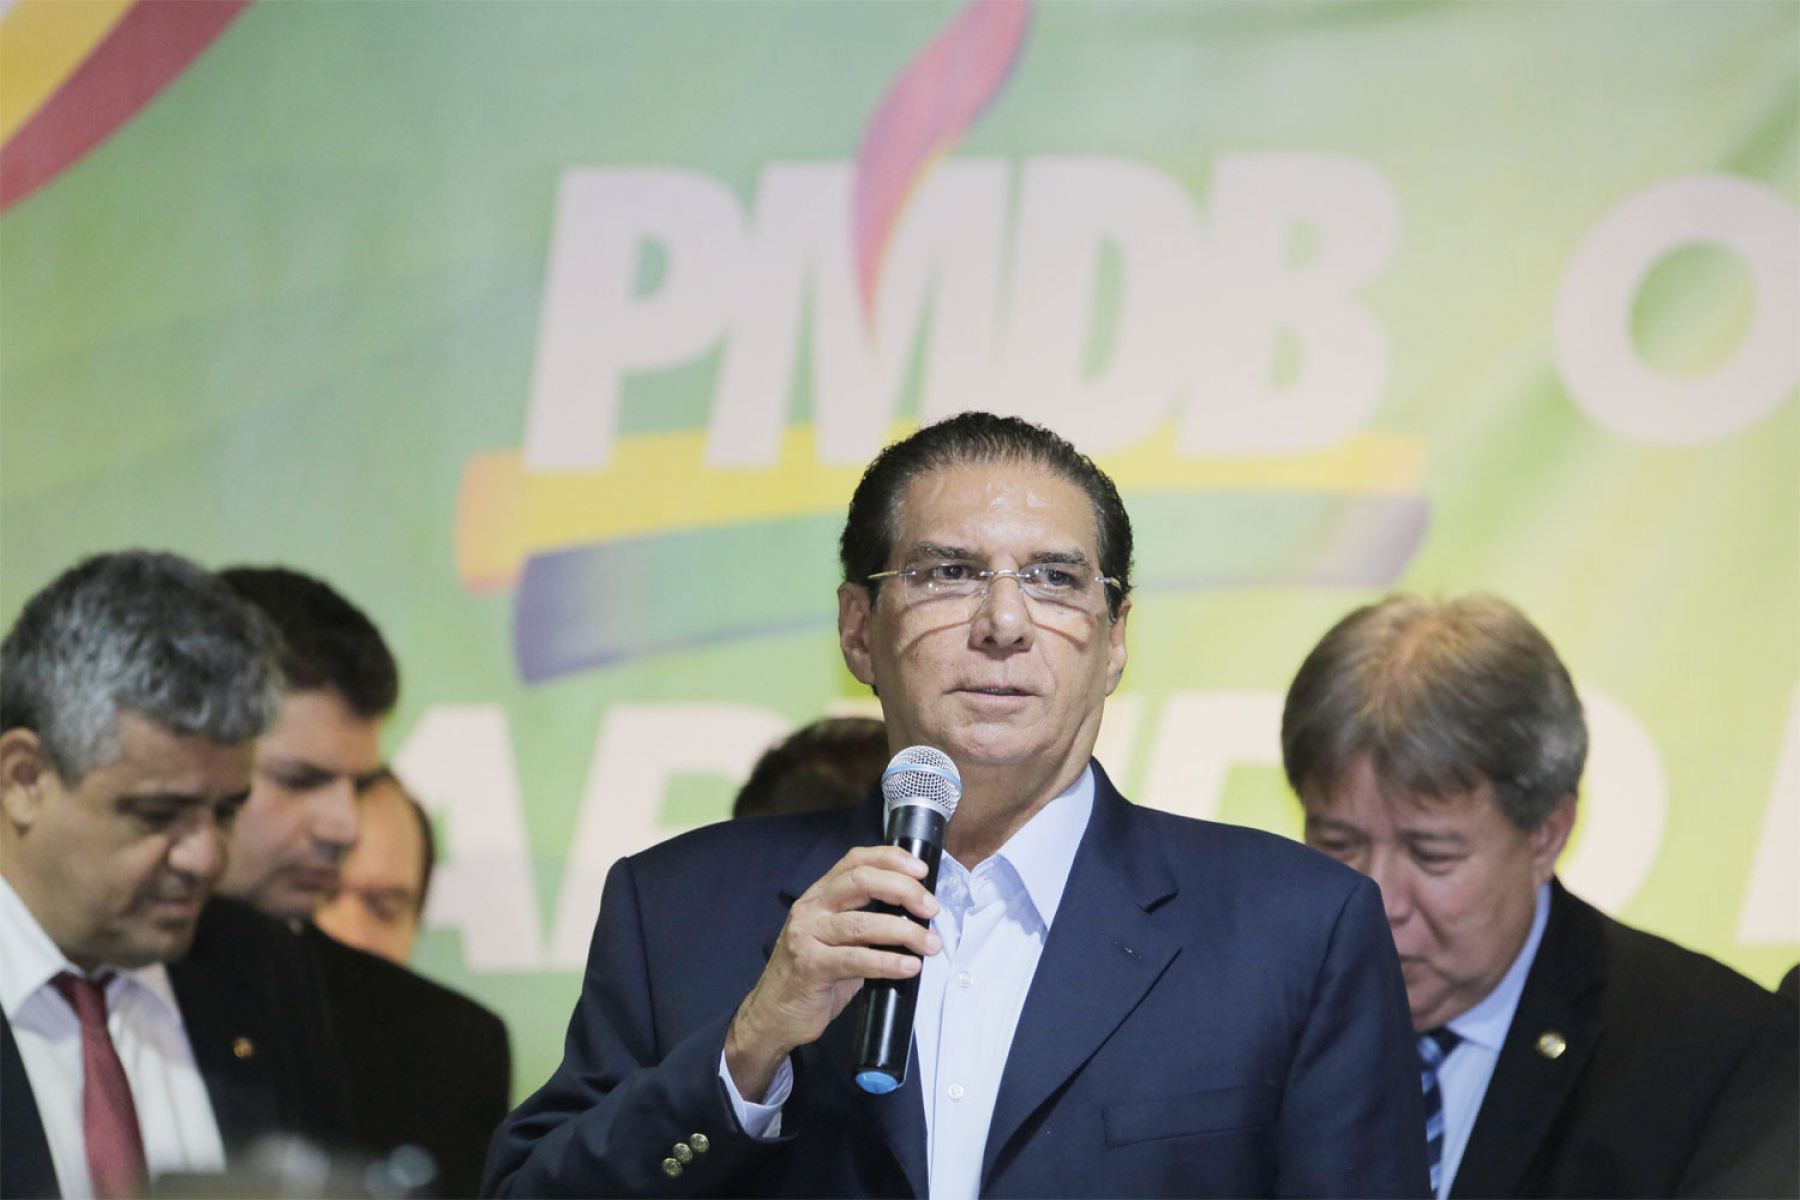  Senador Jader Barbalho recebeu R$ 400 mil da Odebrecht